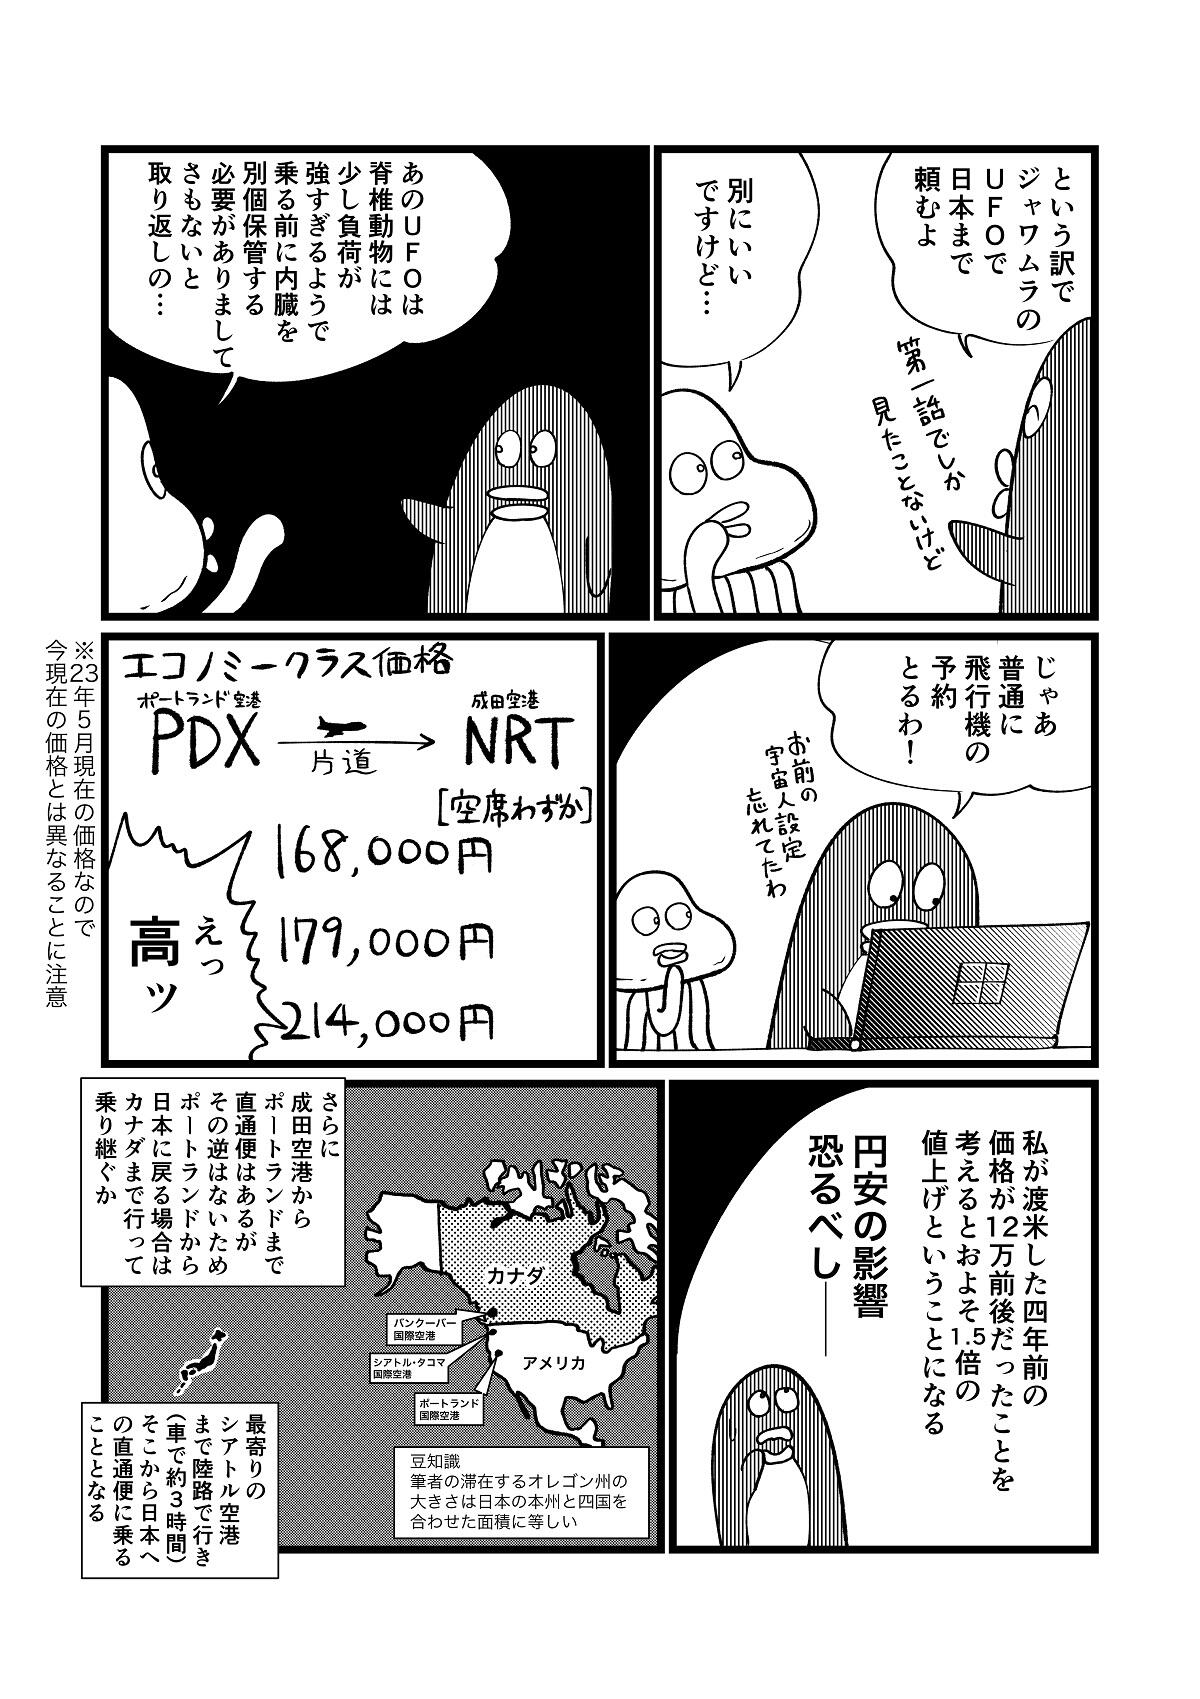 https://www.ryugaku.co.jp/column/images/jawamura21_2_1200.jpg